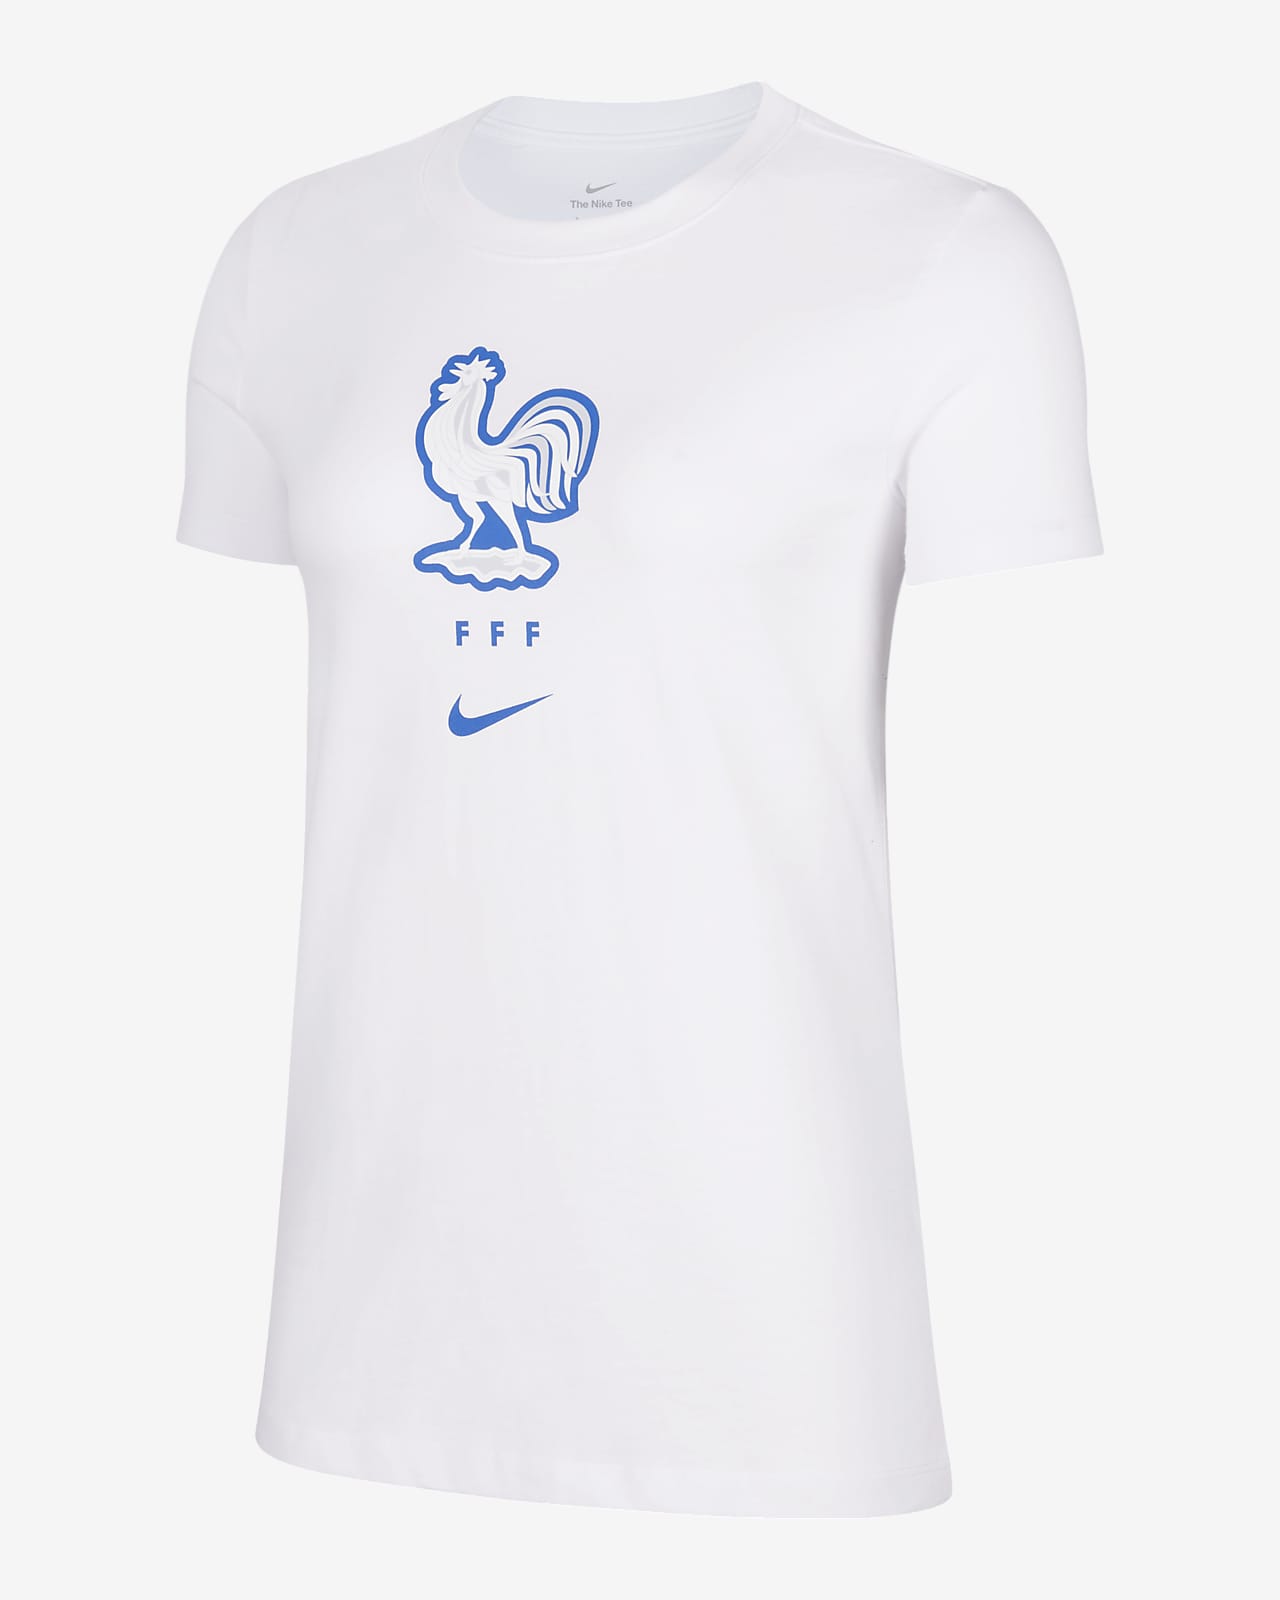 FFF Women's Football T-Shirt. Nike SA